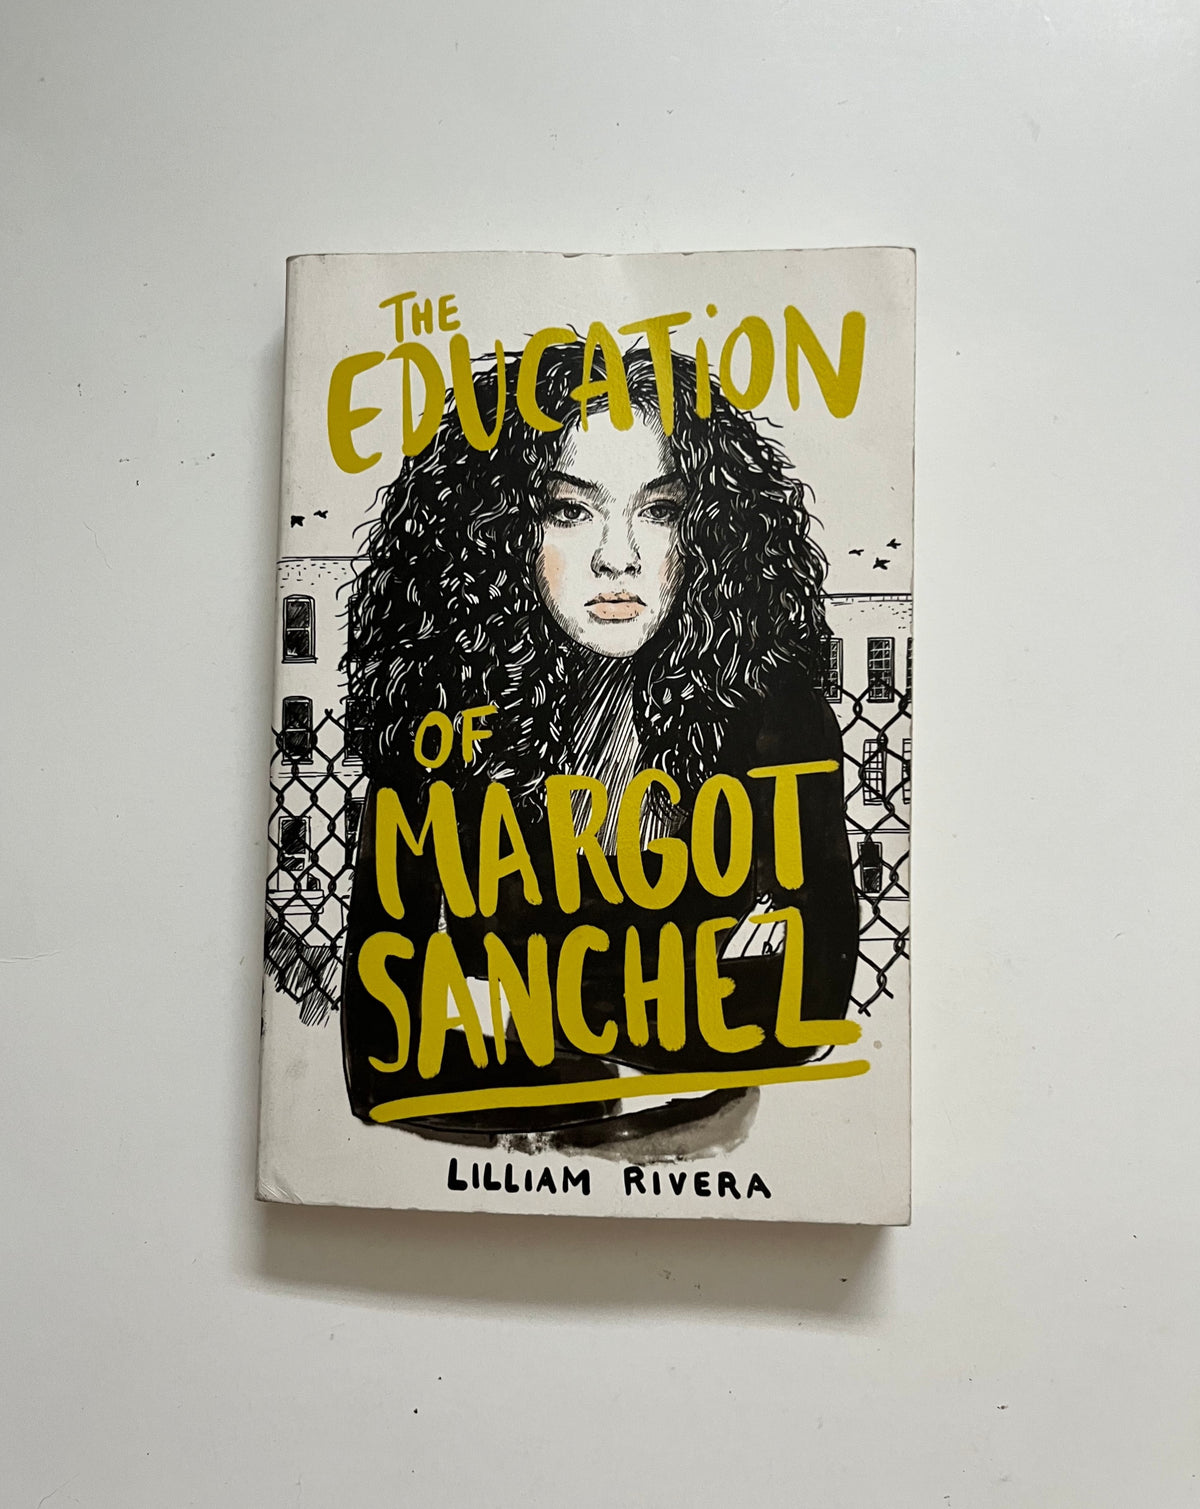 The Education of Margot Sanchez by Lilliam Rivera